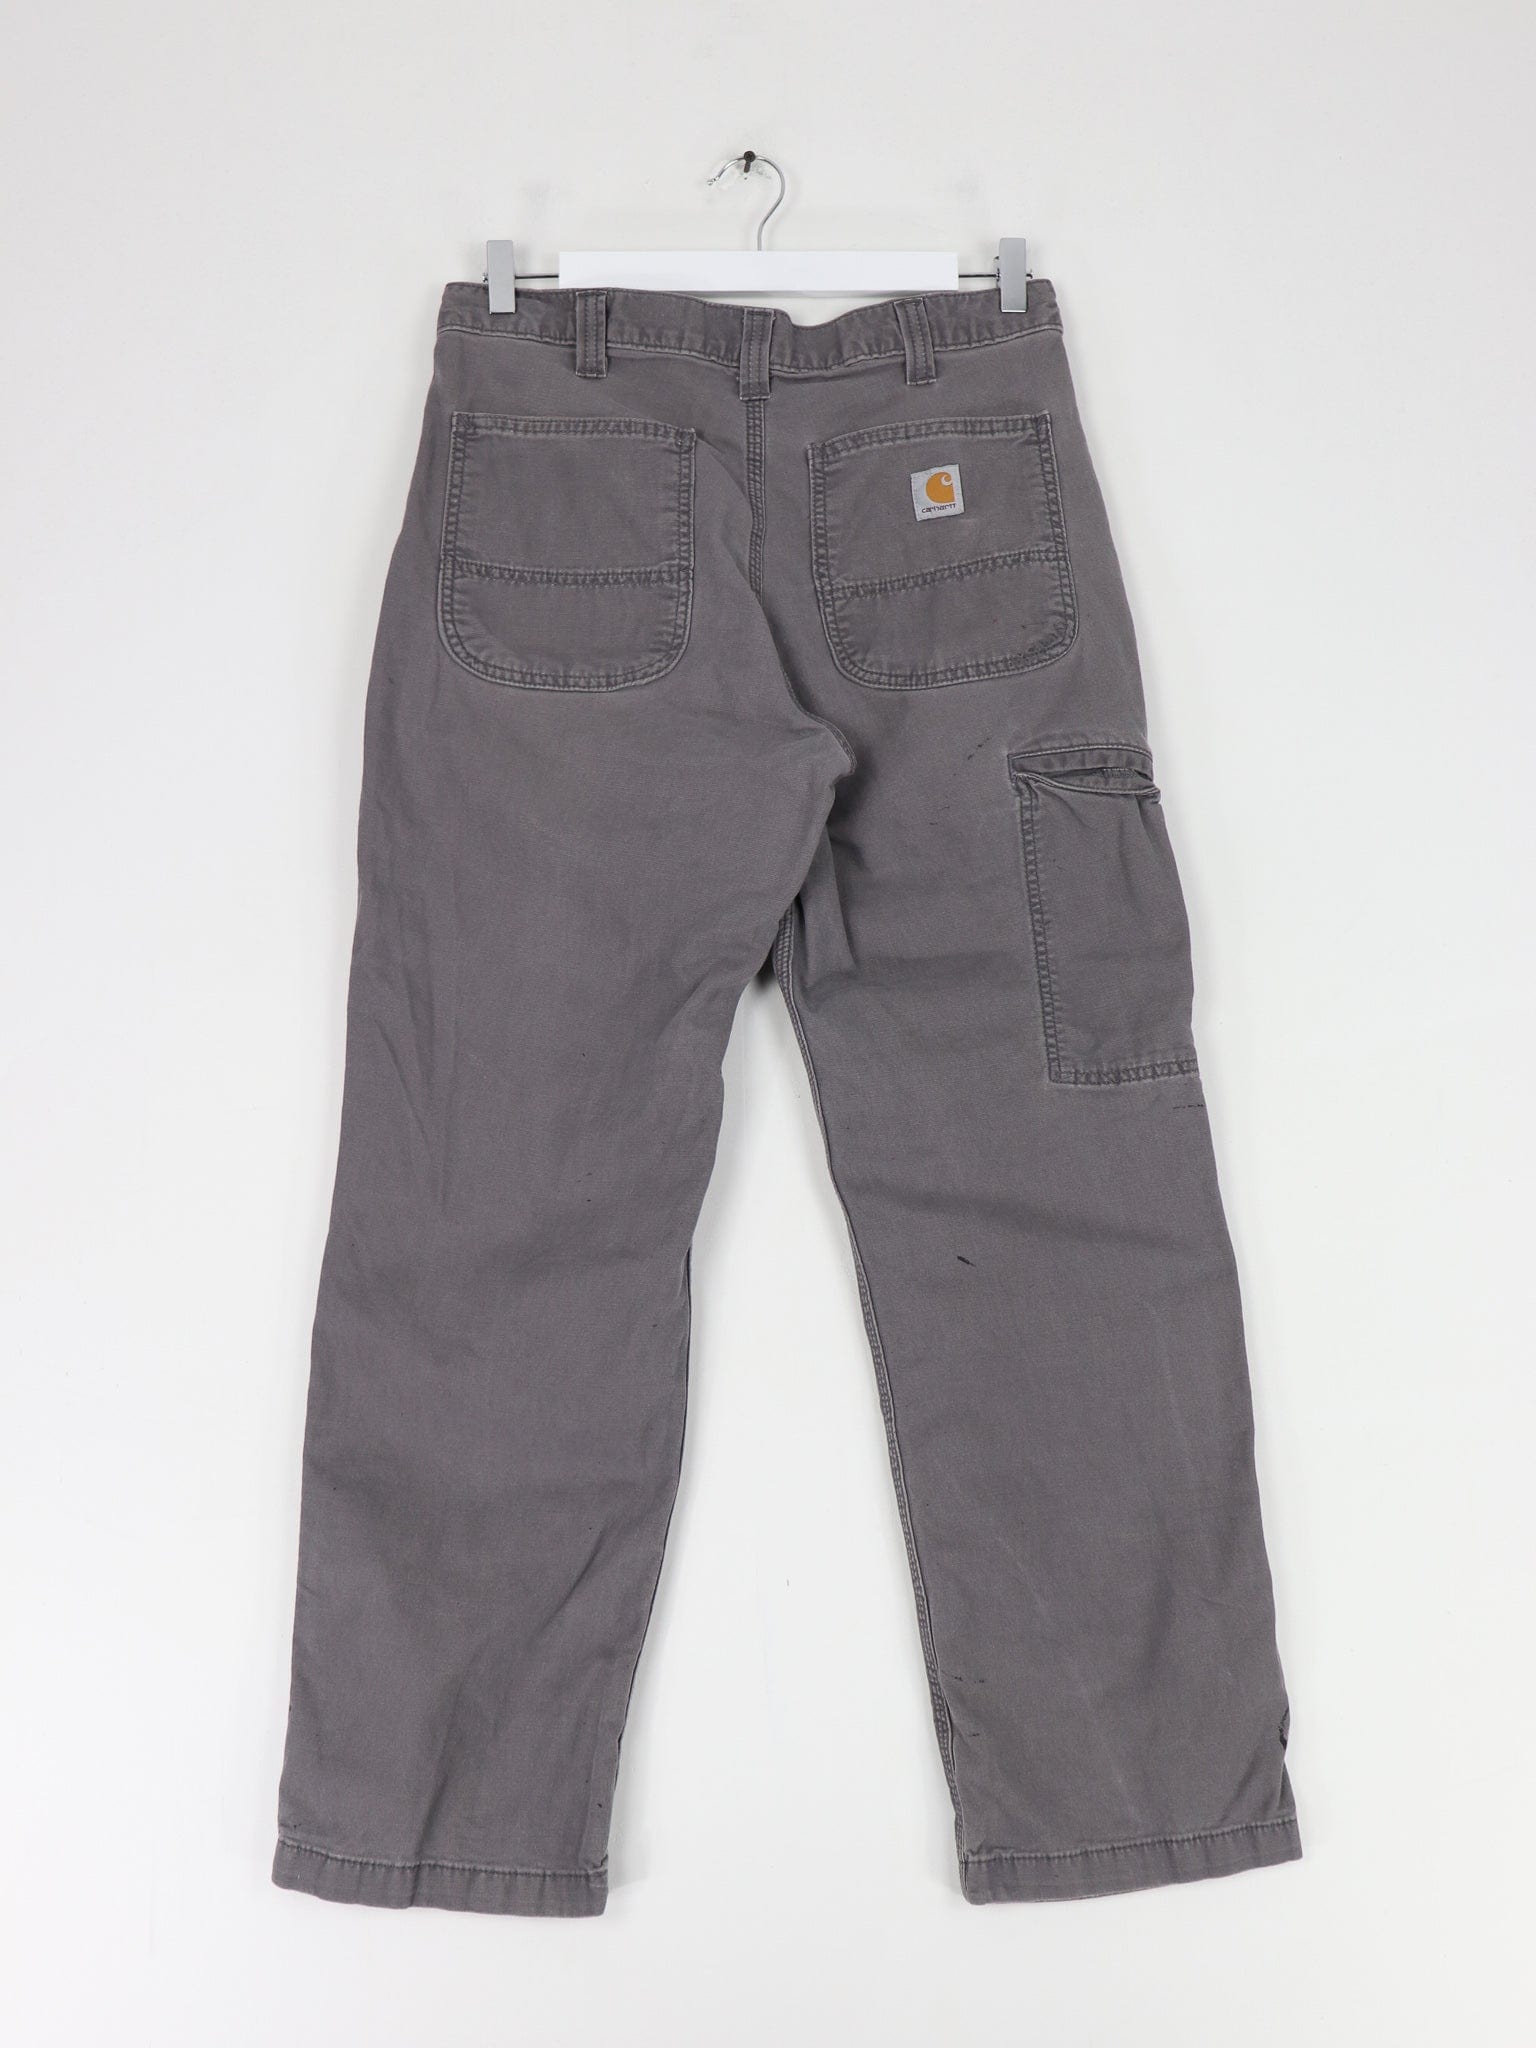 Carhartt Pants Men's 32x28 Grey Carpenter Workwear Relaxed Fit